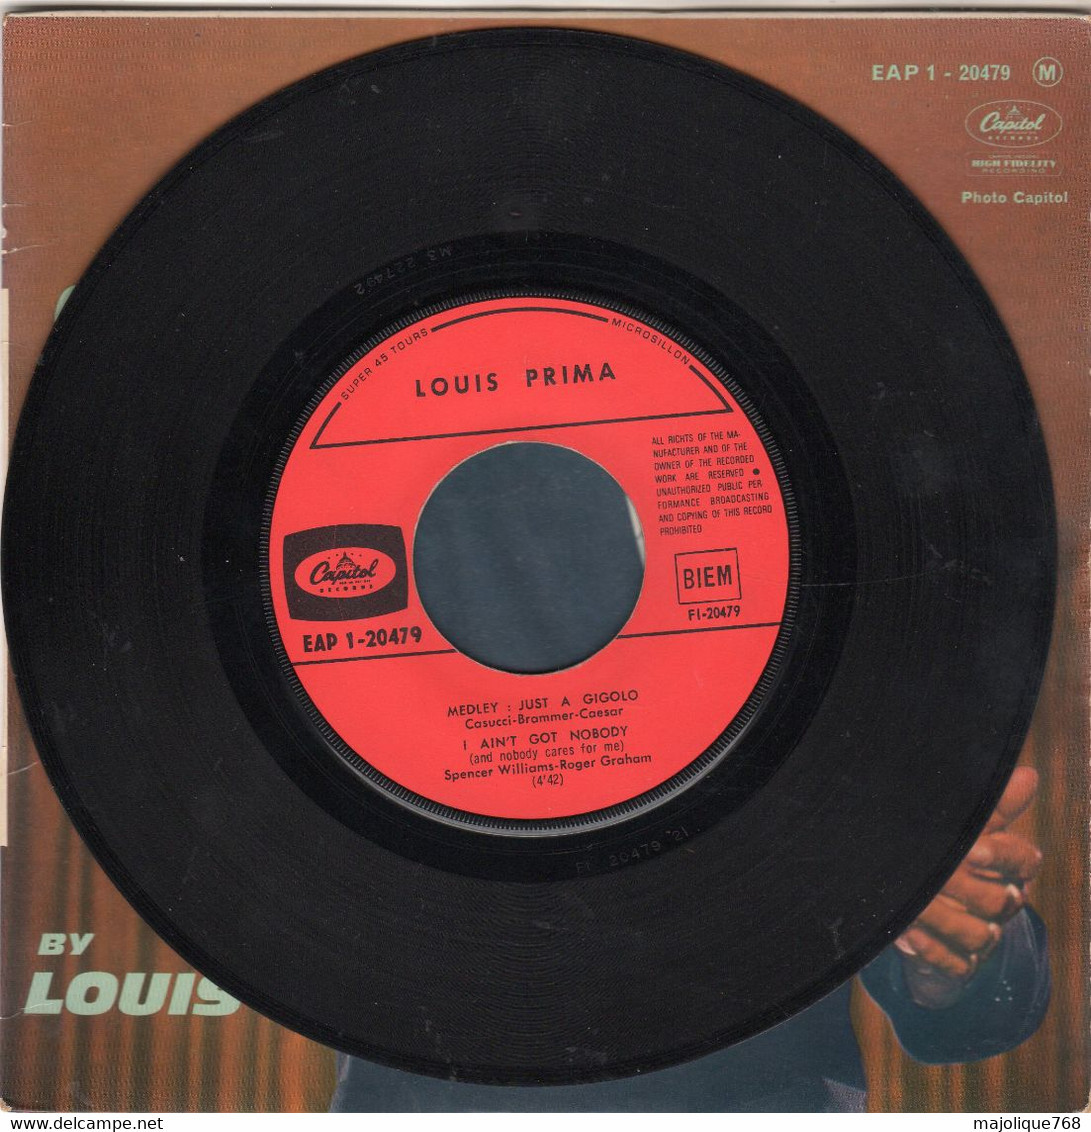 Disque 45T De Louis Prima - Just A Gigolo - Capitol EAP 1 - 20479 - France 1963 - - Jazz